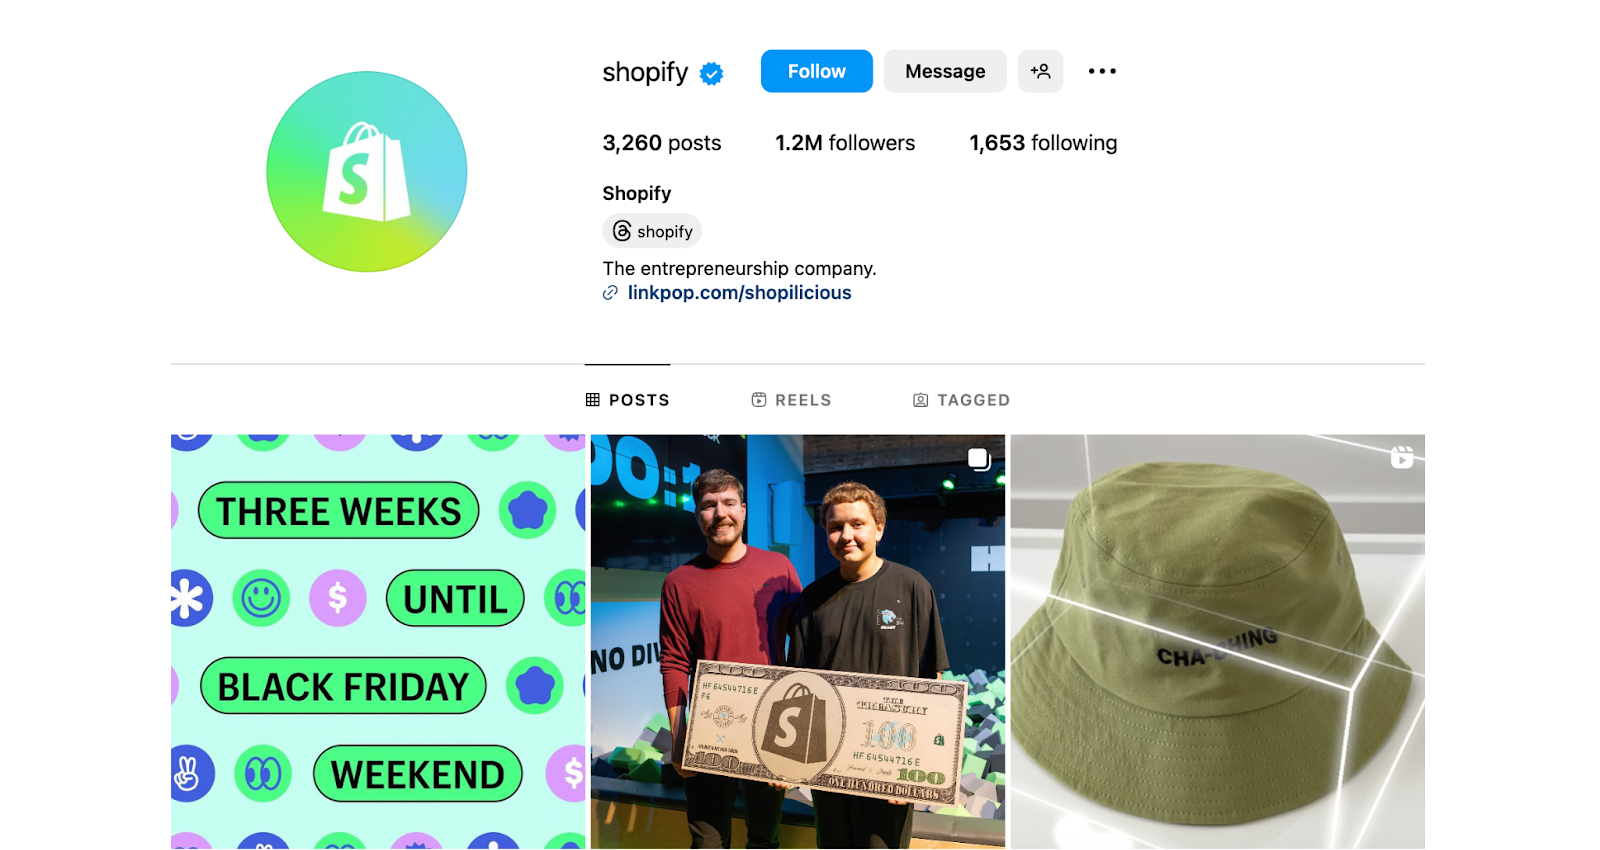 Instagram marketing for Shopify businesses